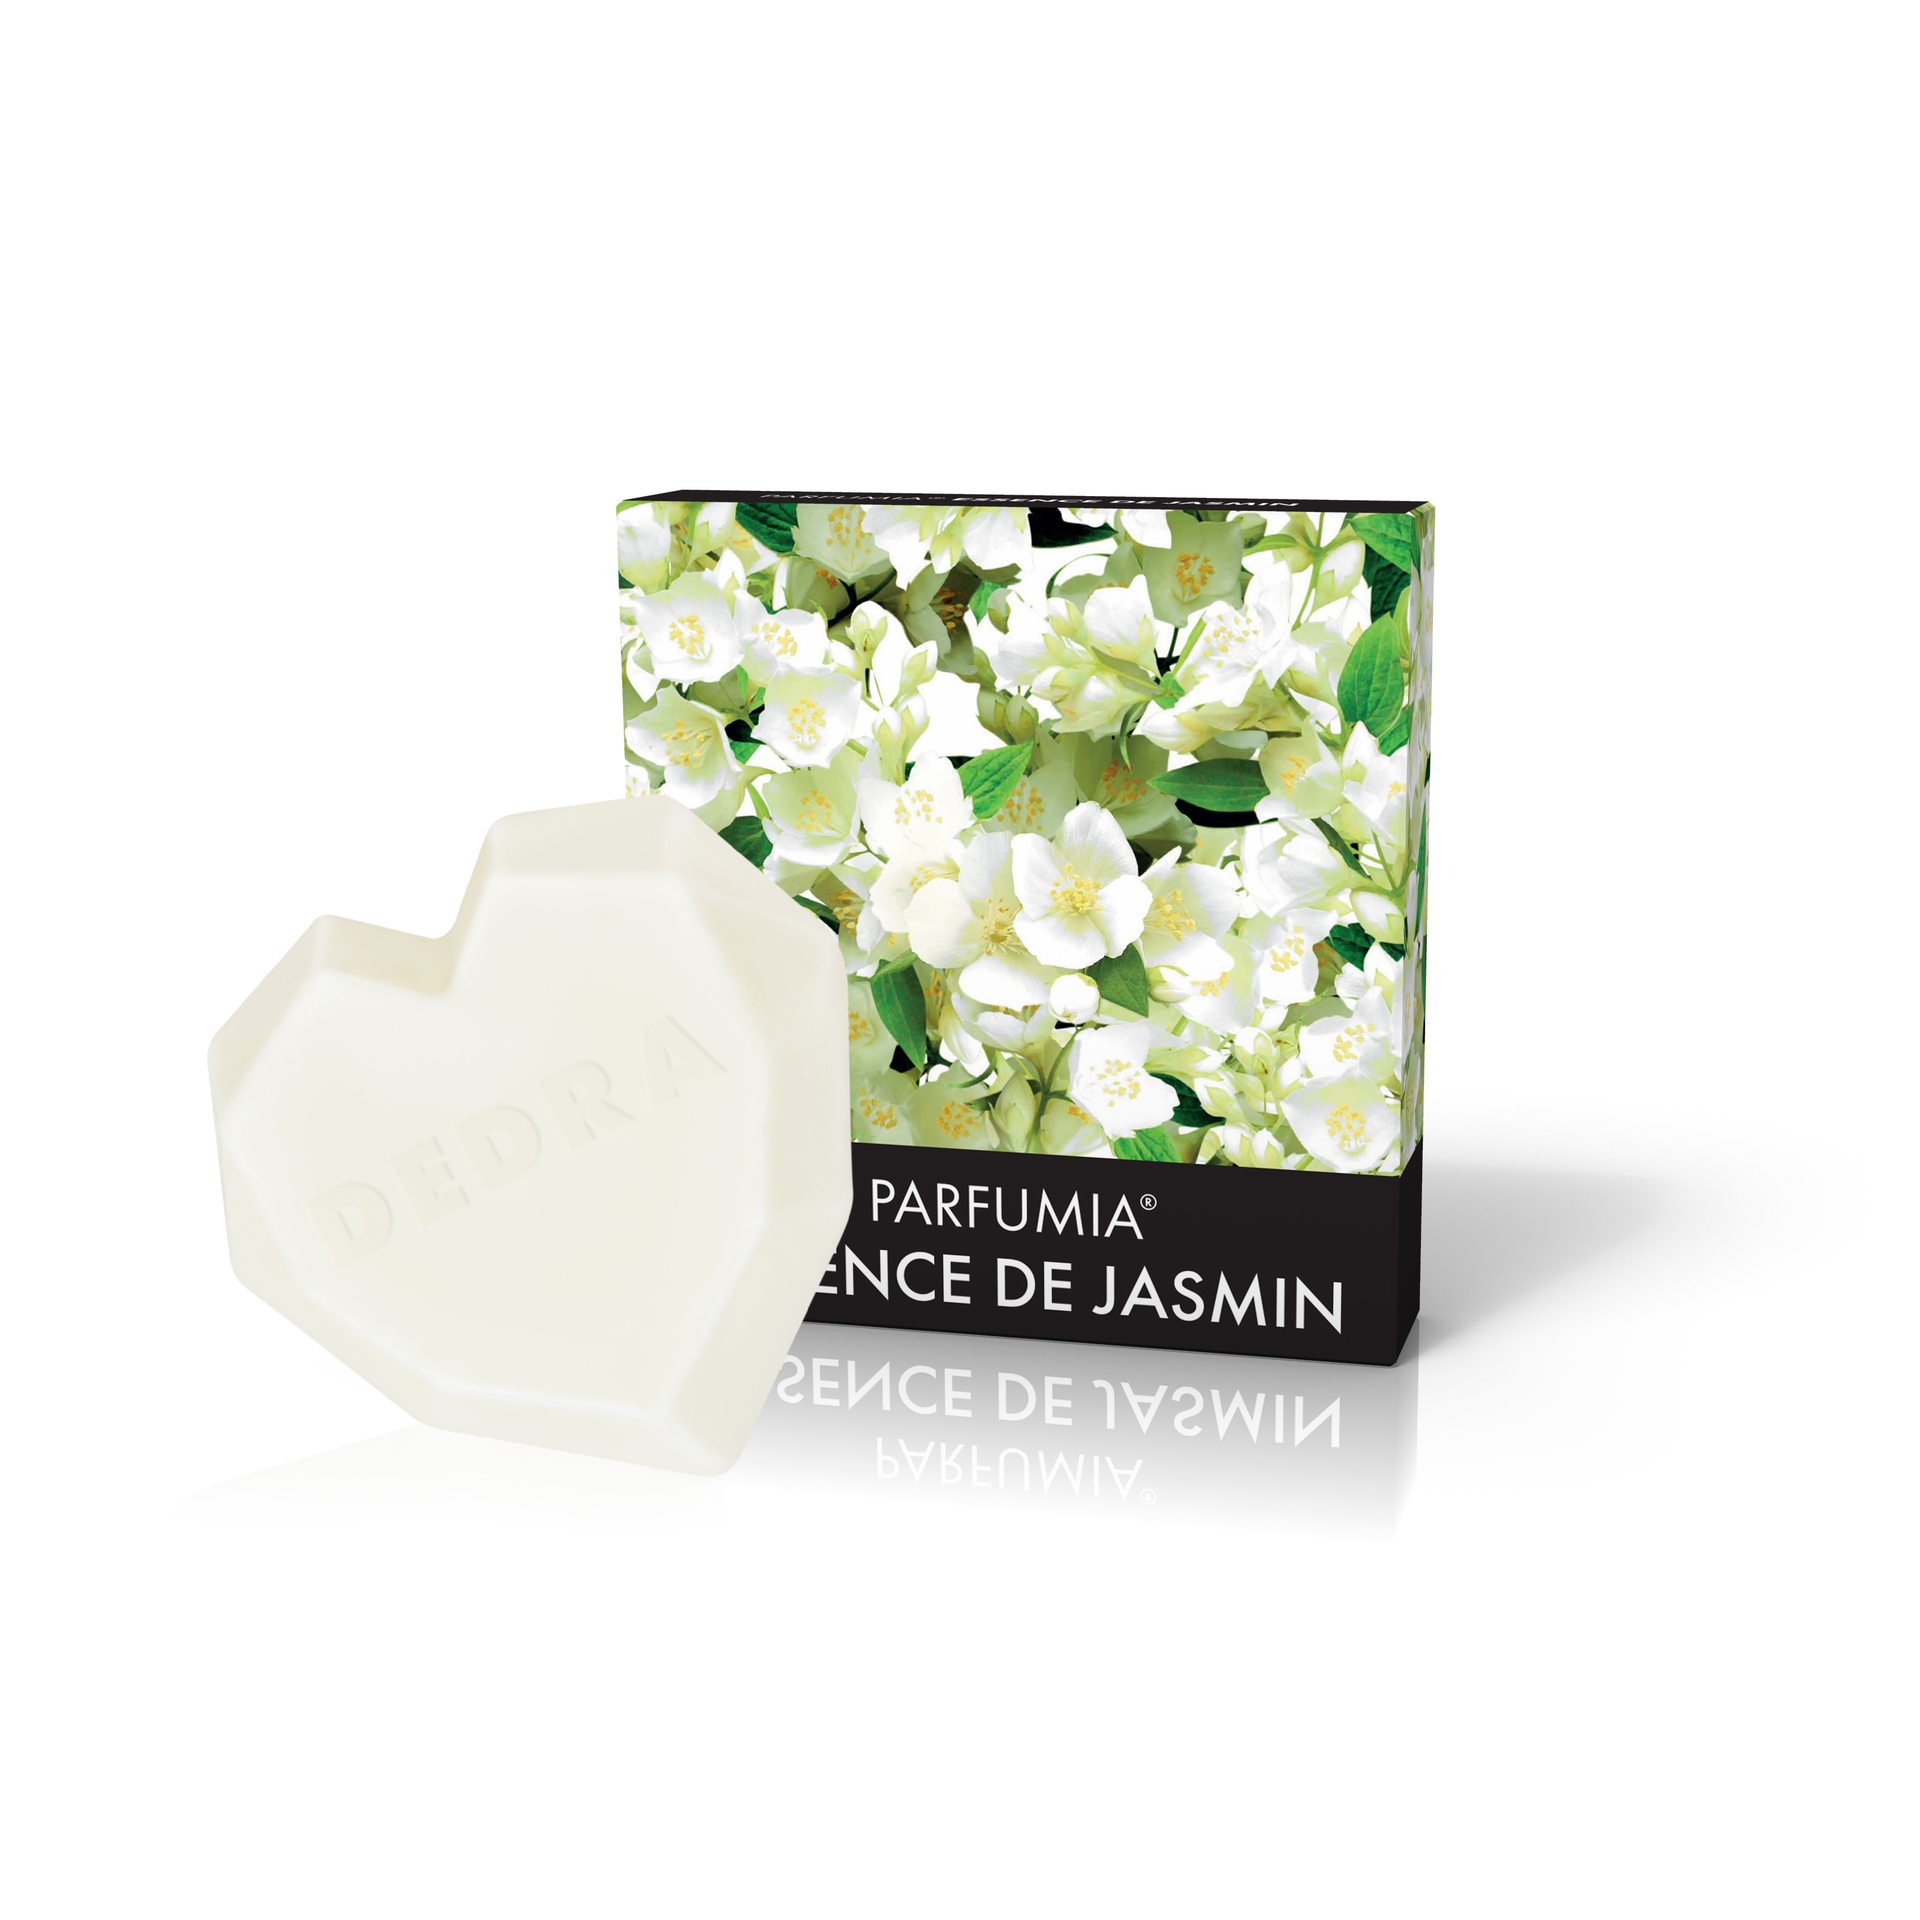 Vonný sójový EKO vosk Parfumia Essence de jasmin